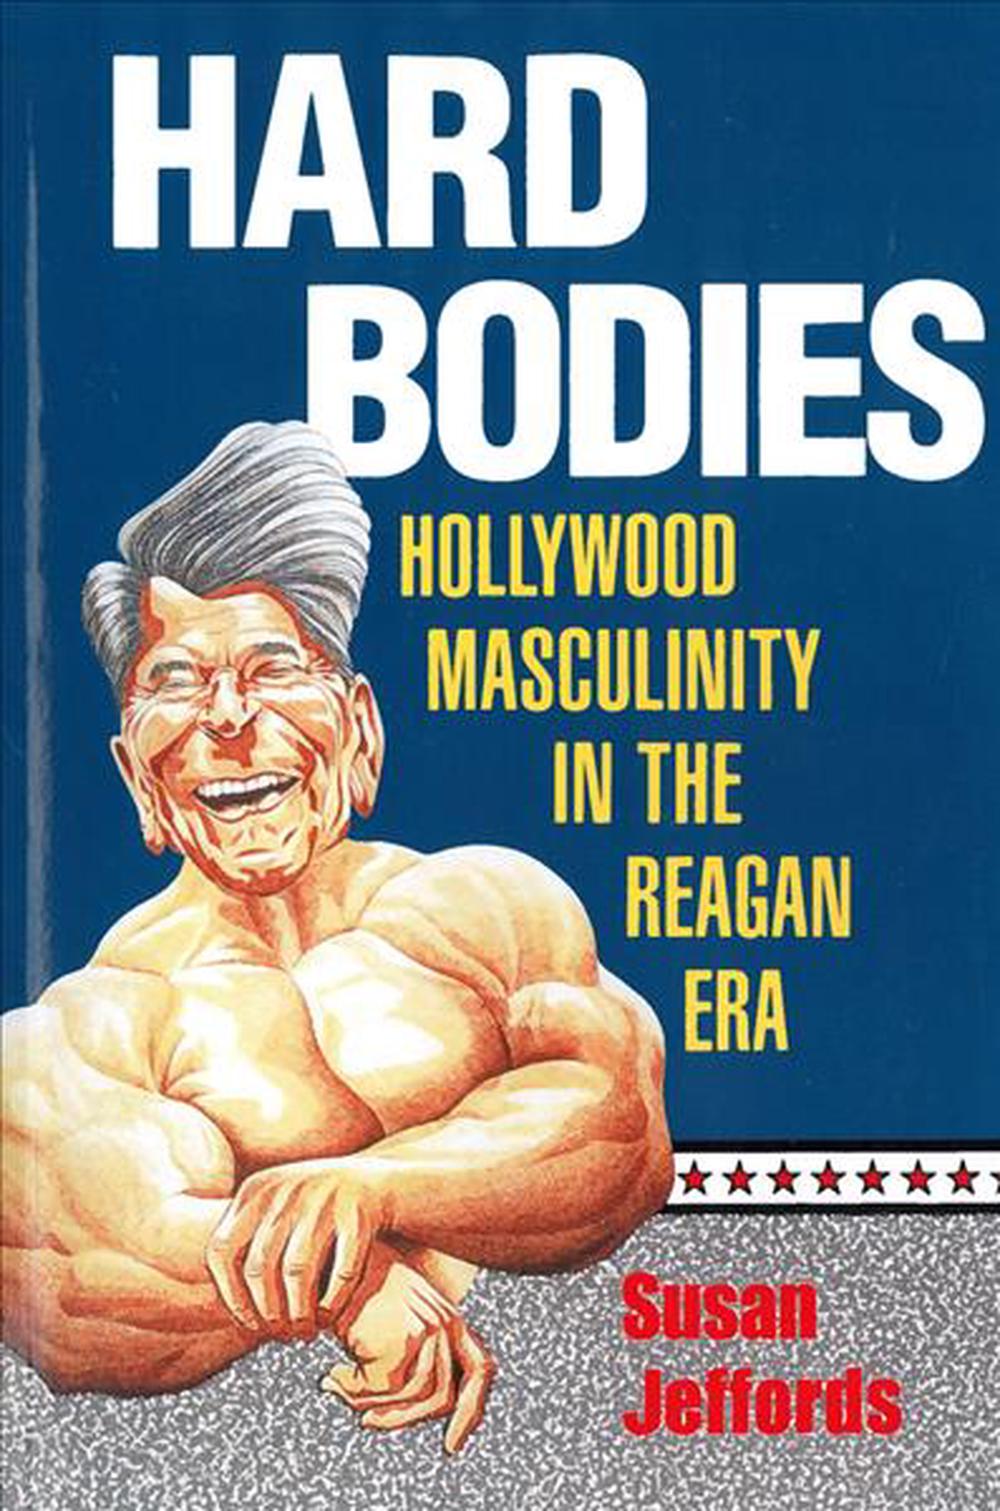 Hard Bodies Hollywood Masculinity in the Reagan Era by Susan Jeffords (English) eBay